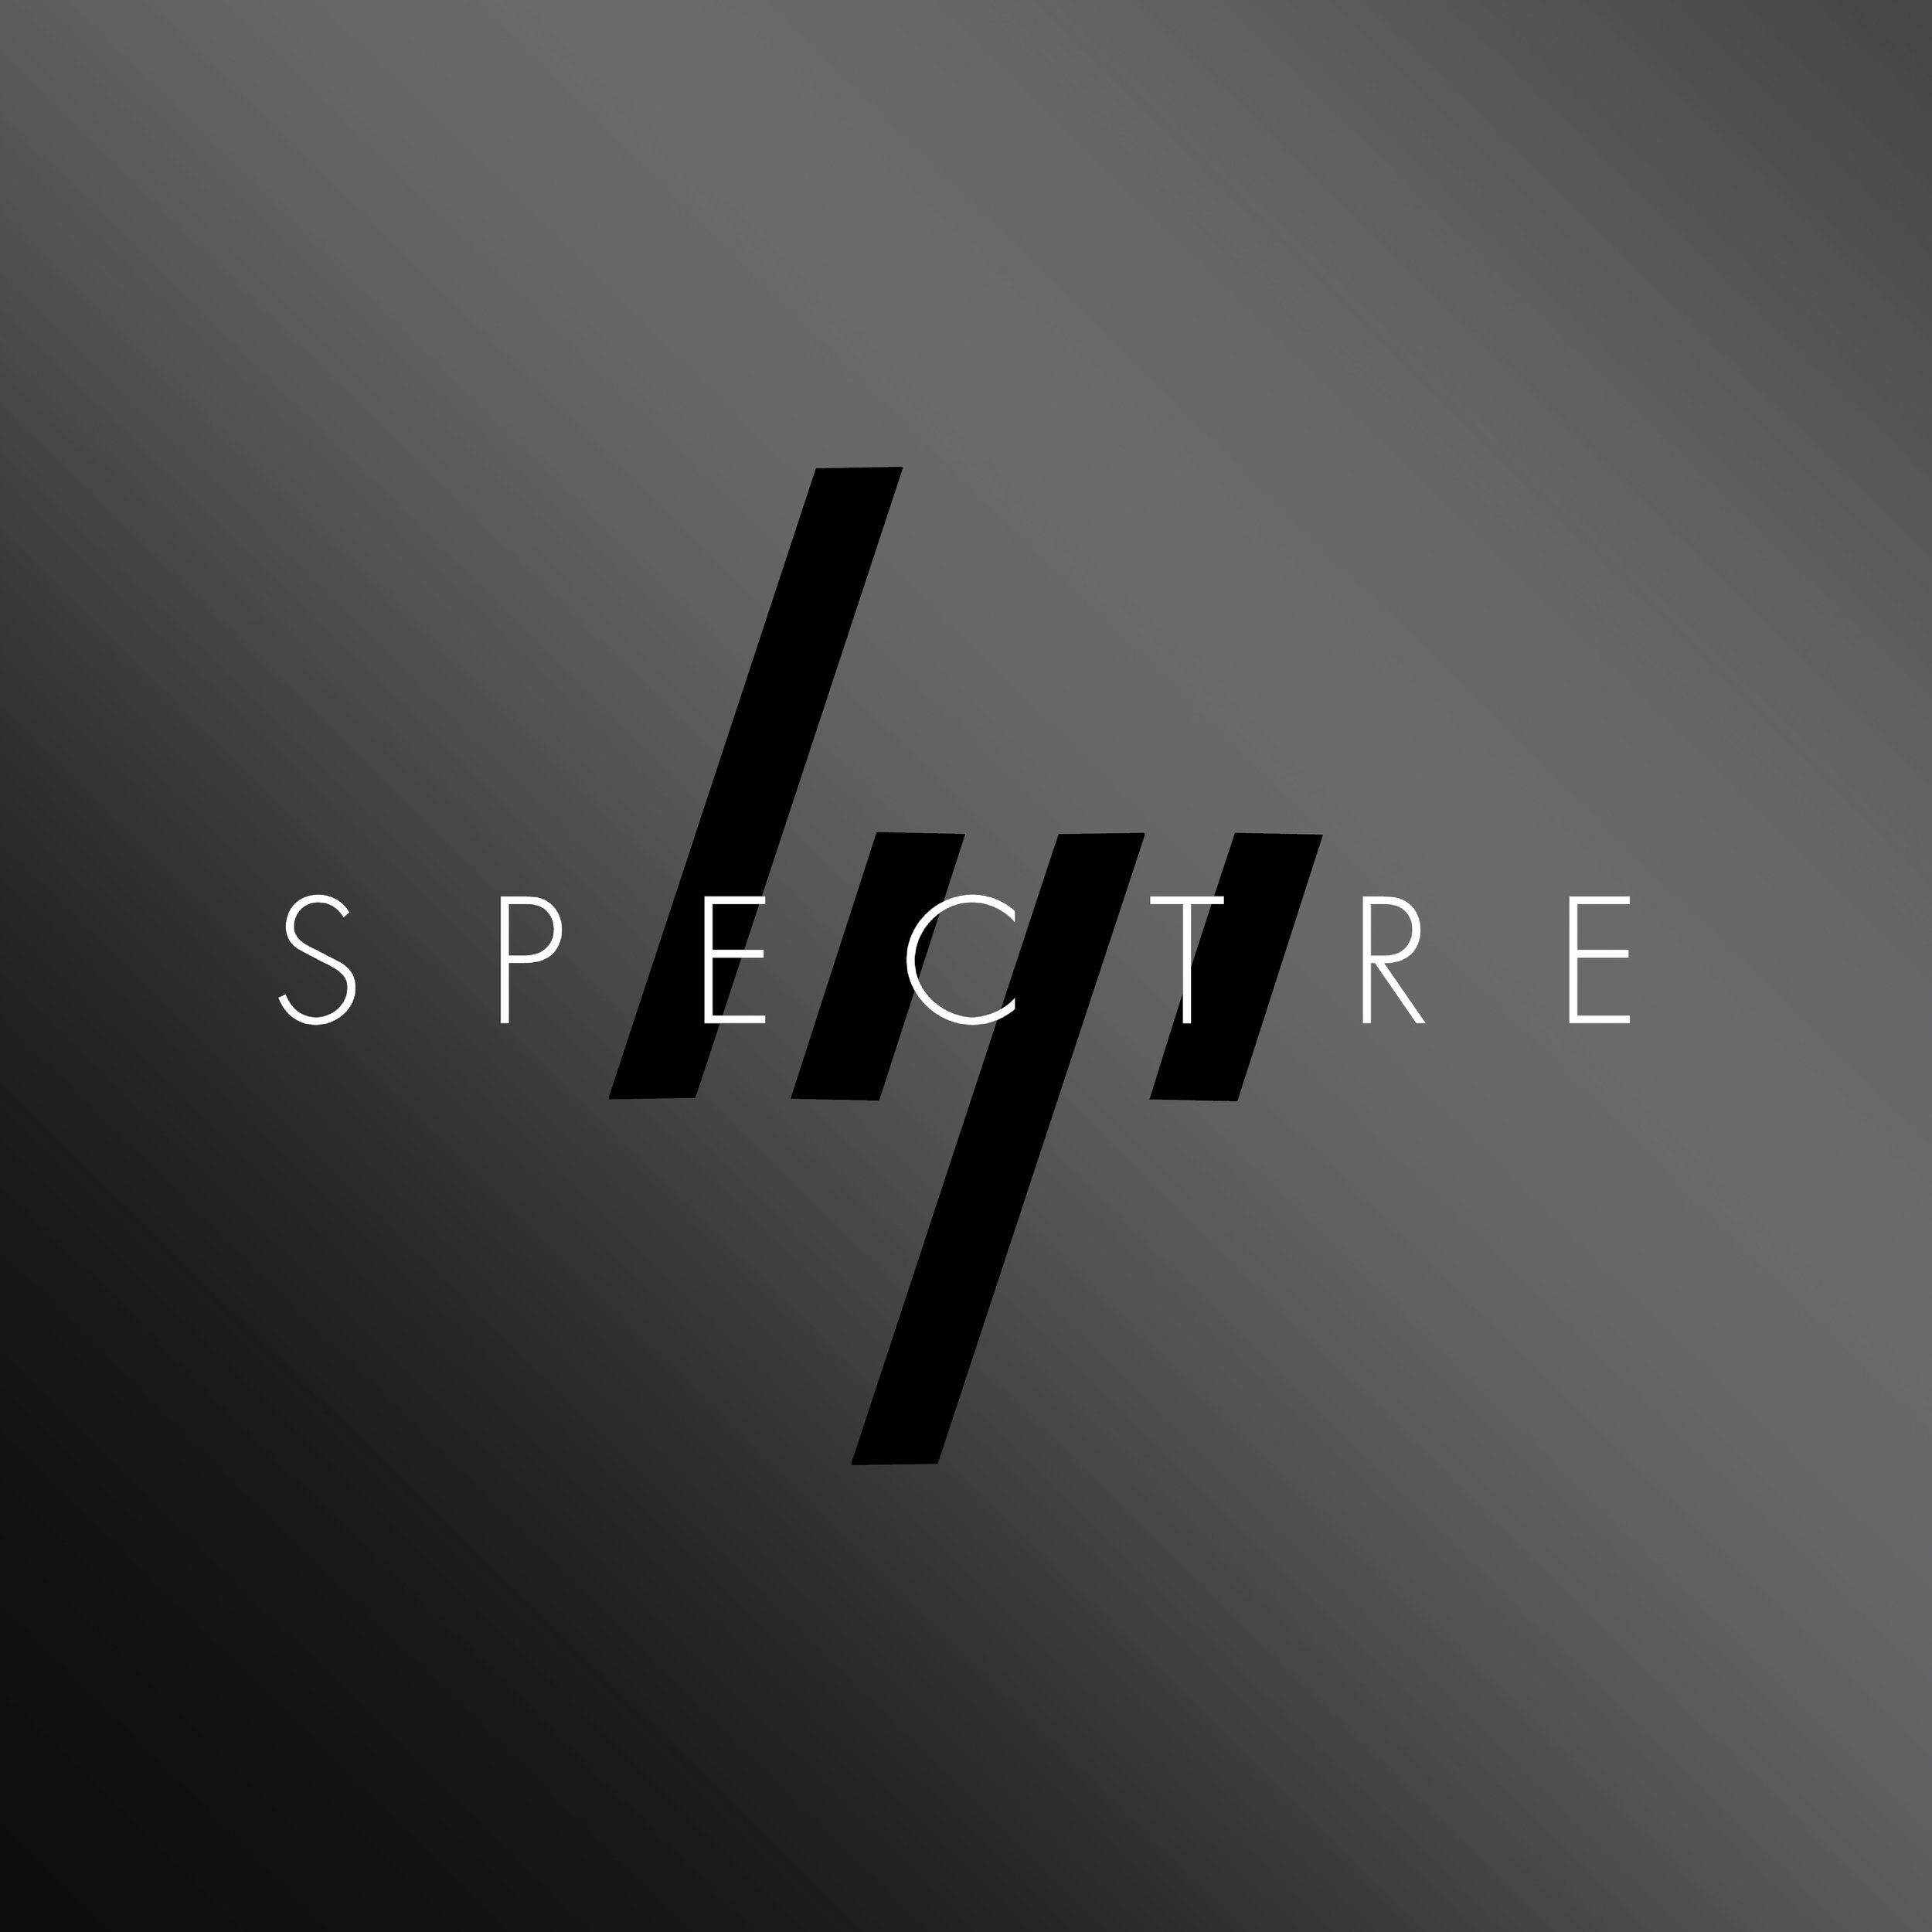 HP Spectre